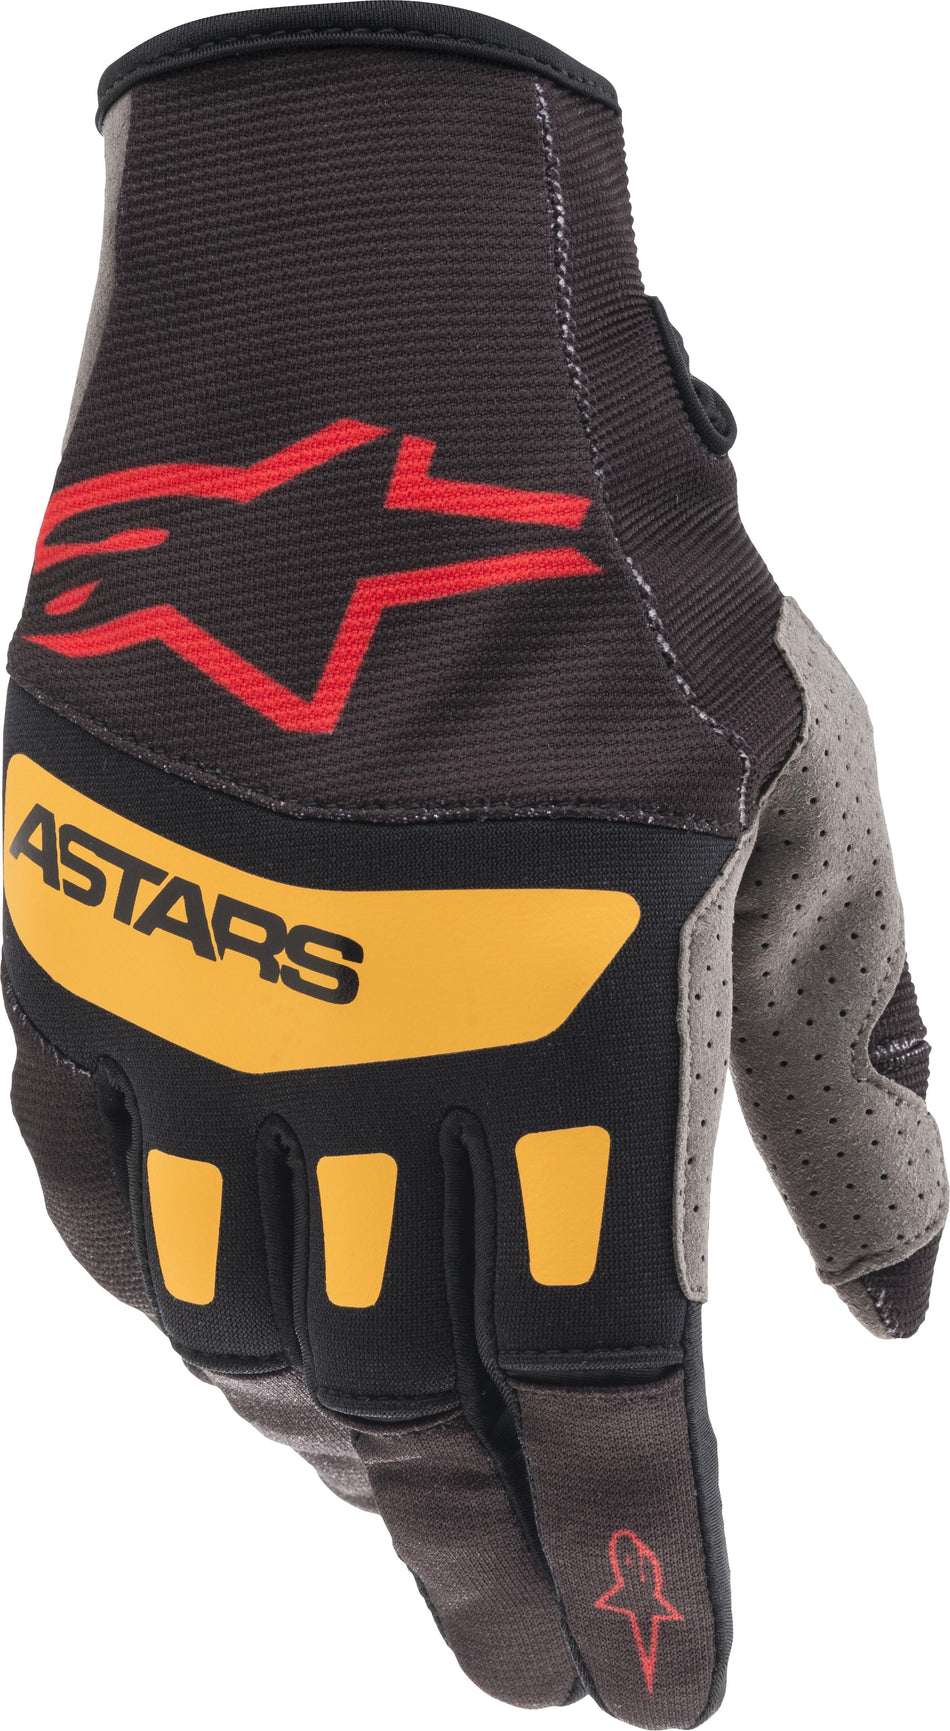 ALPINESTARS Techstar Gloves Black/Bright Red/Orange Sm 3561021-1344-S